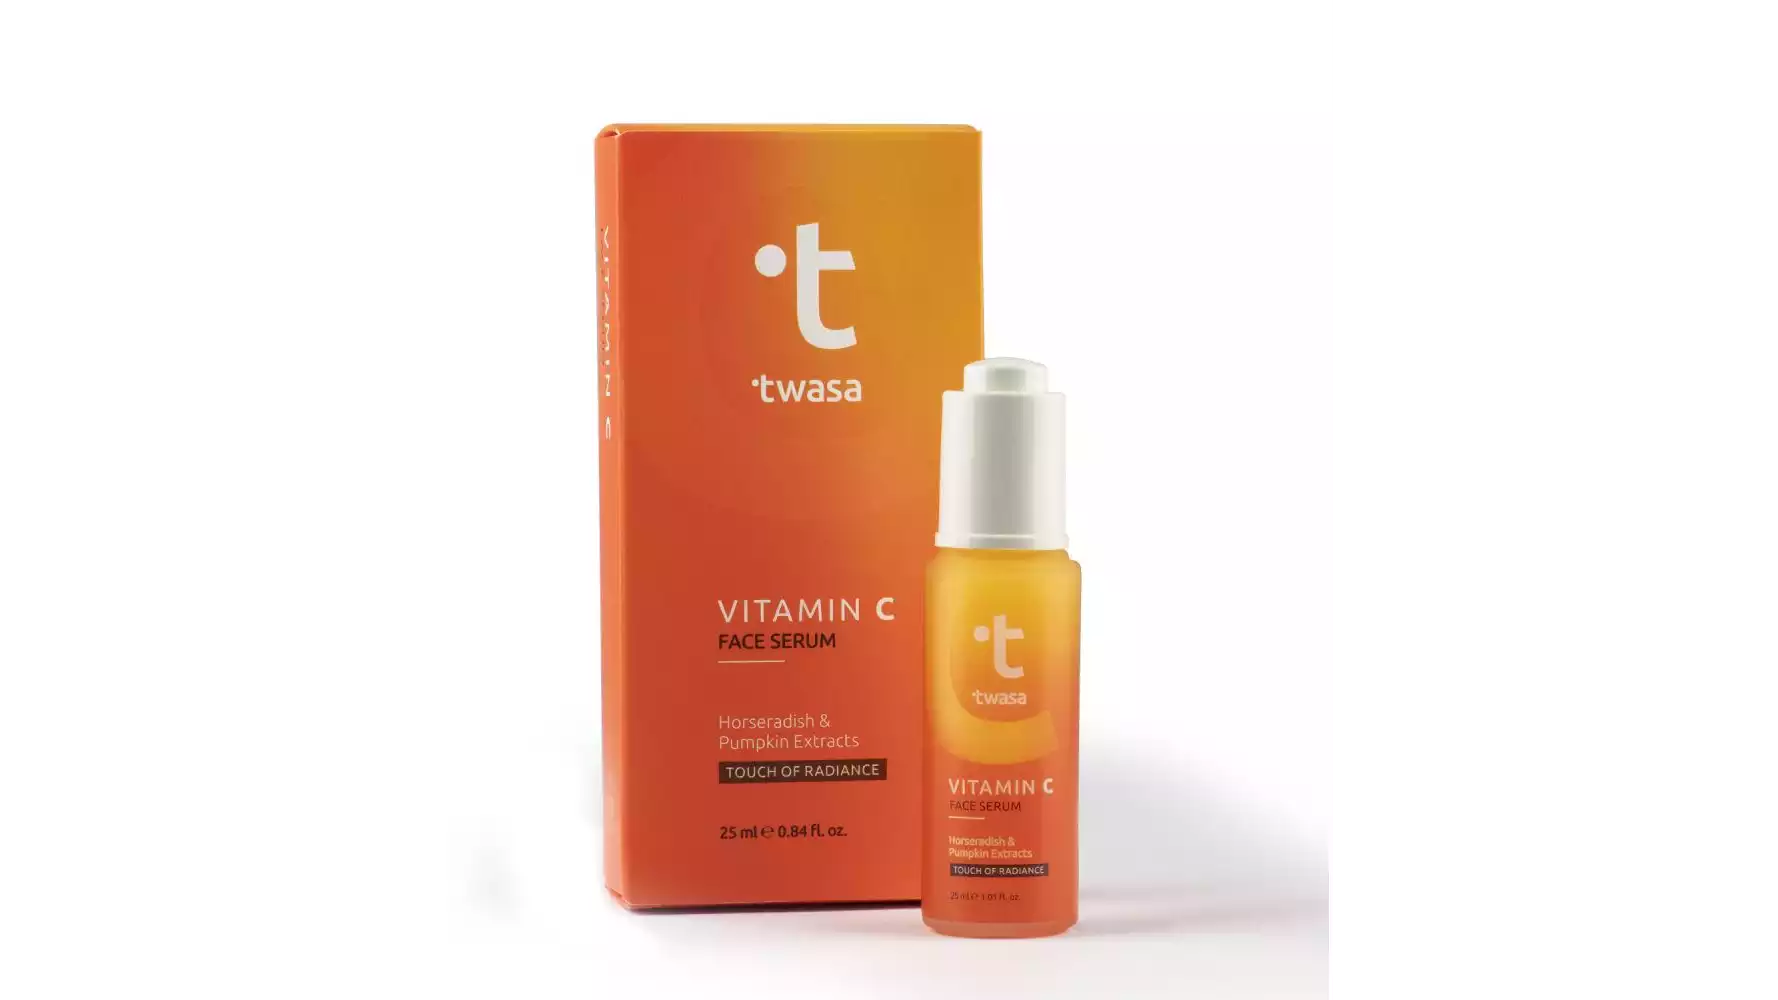 Twasa Vitamin C Face Serum  (25ml)